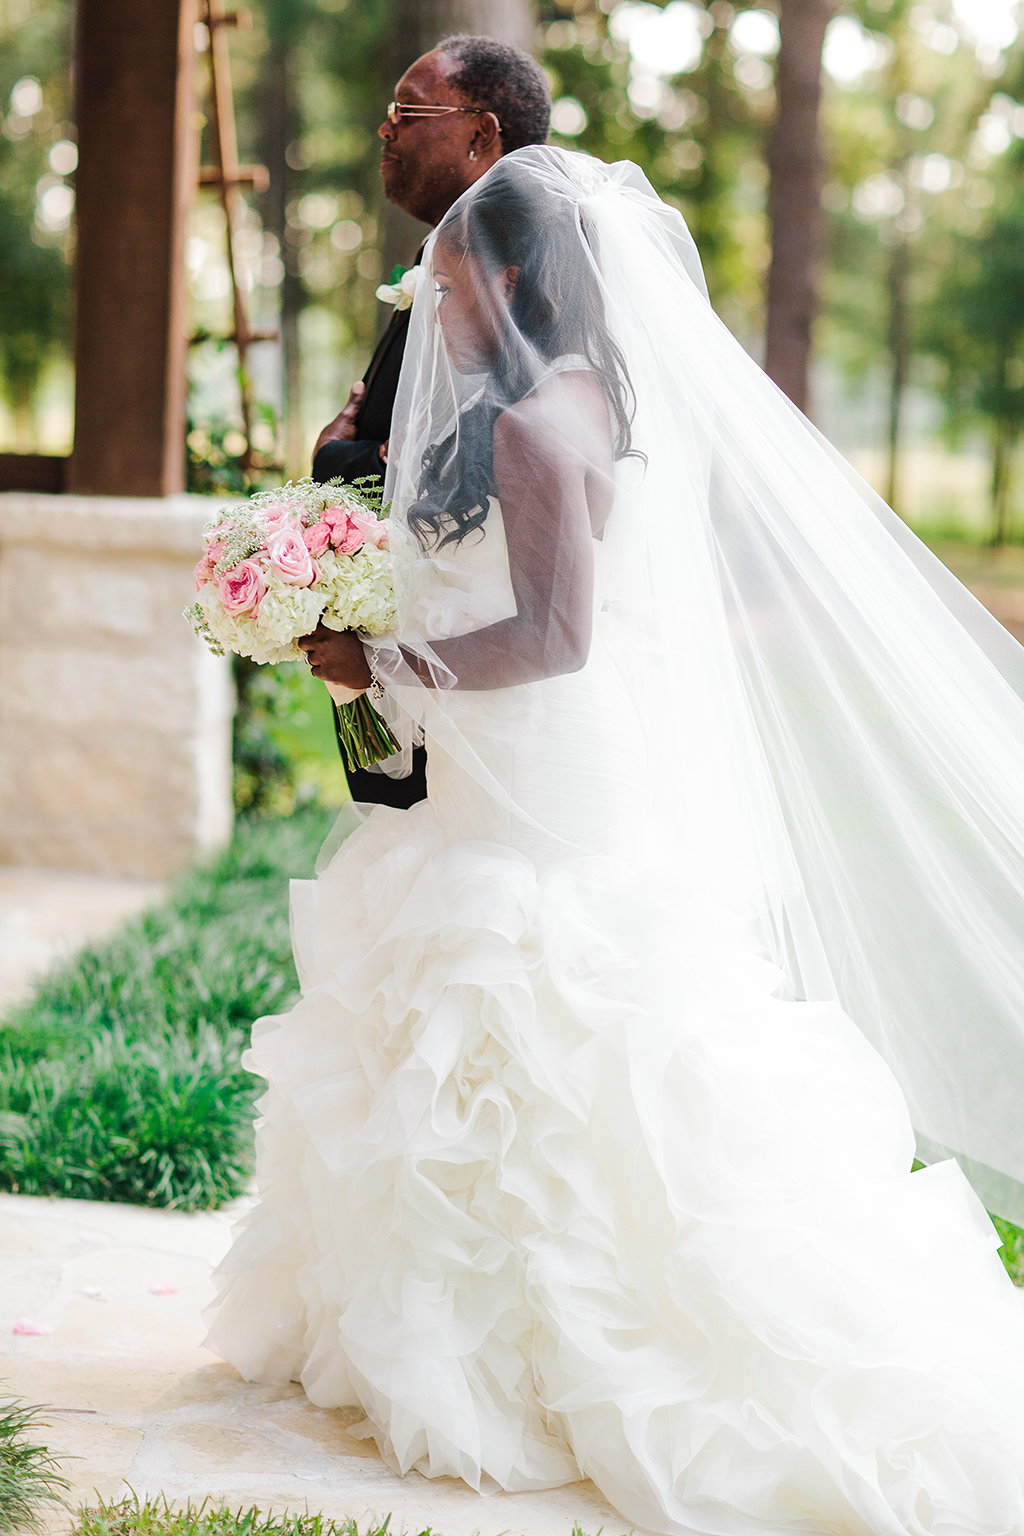 Jennifer-&-Kirk-Shelton-Wedding-2014-Wedding-1616-_-Kristen-Curette-Photography-Edit